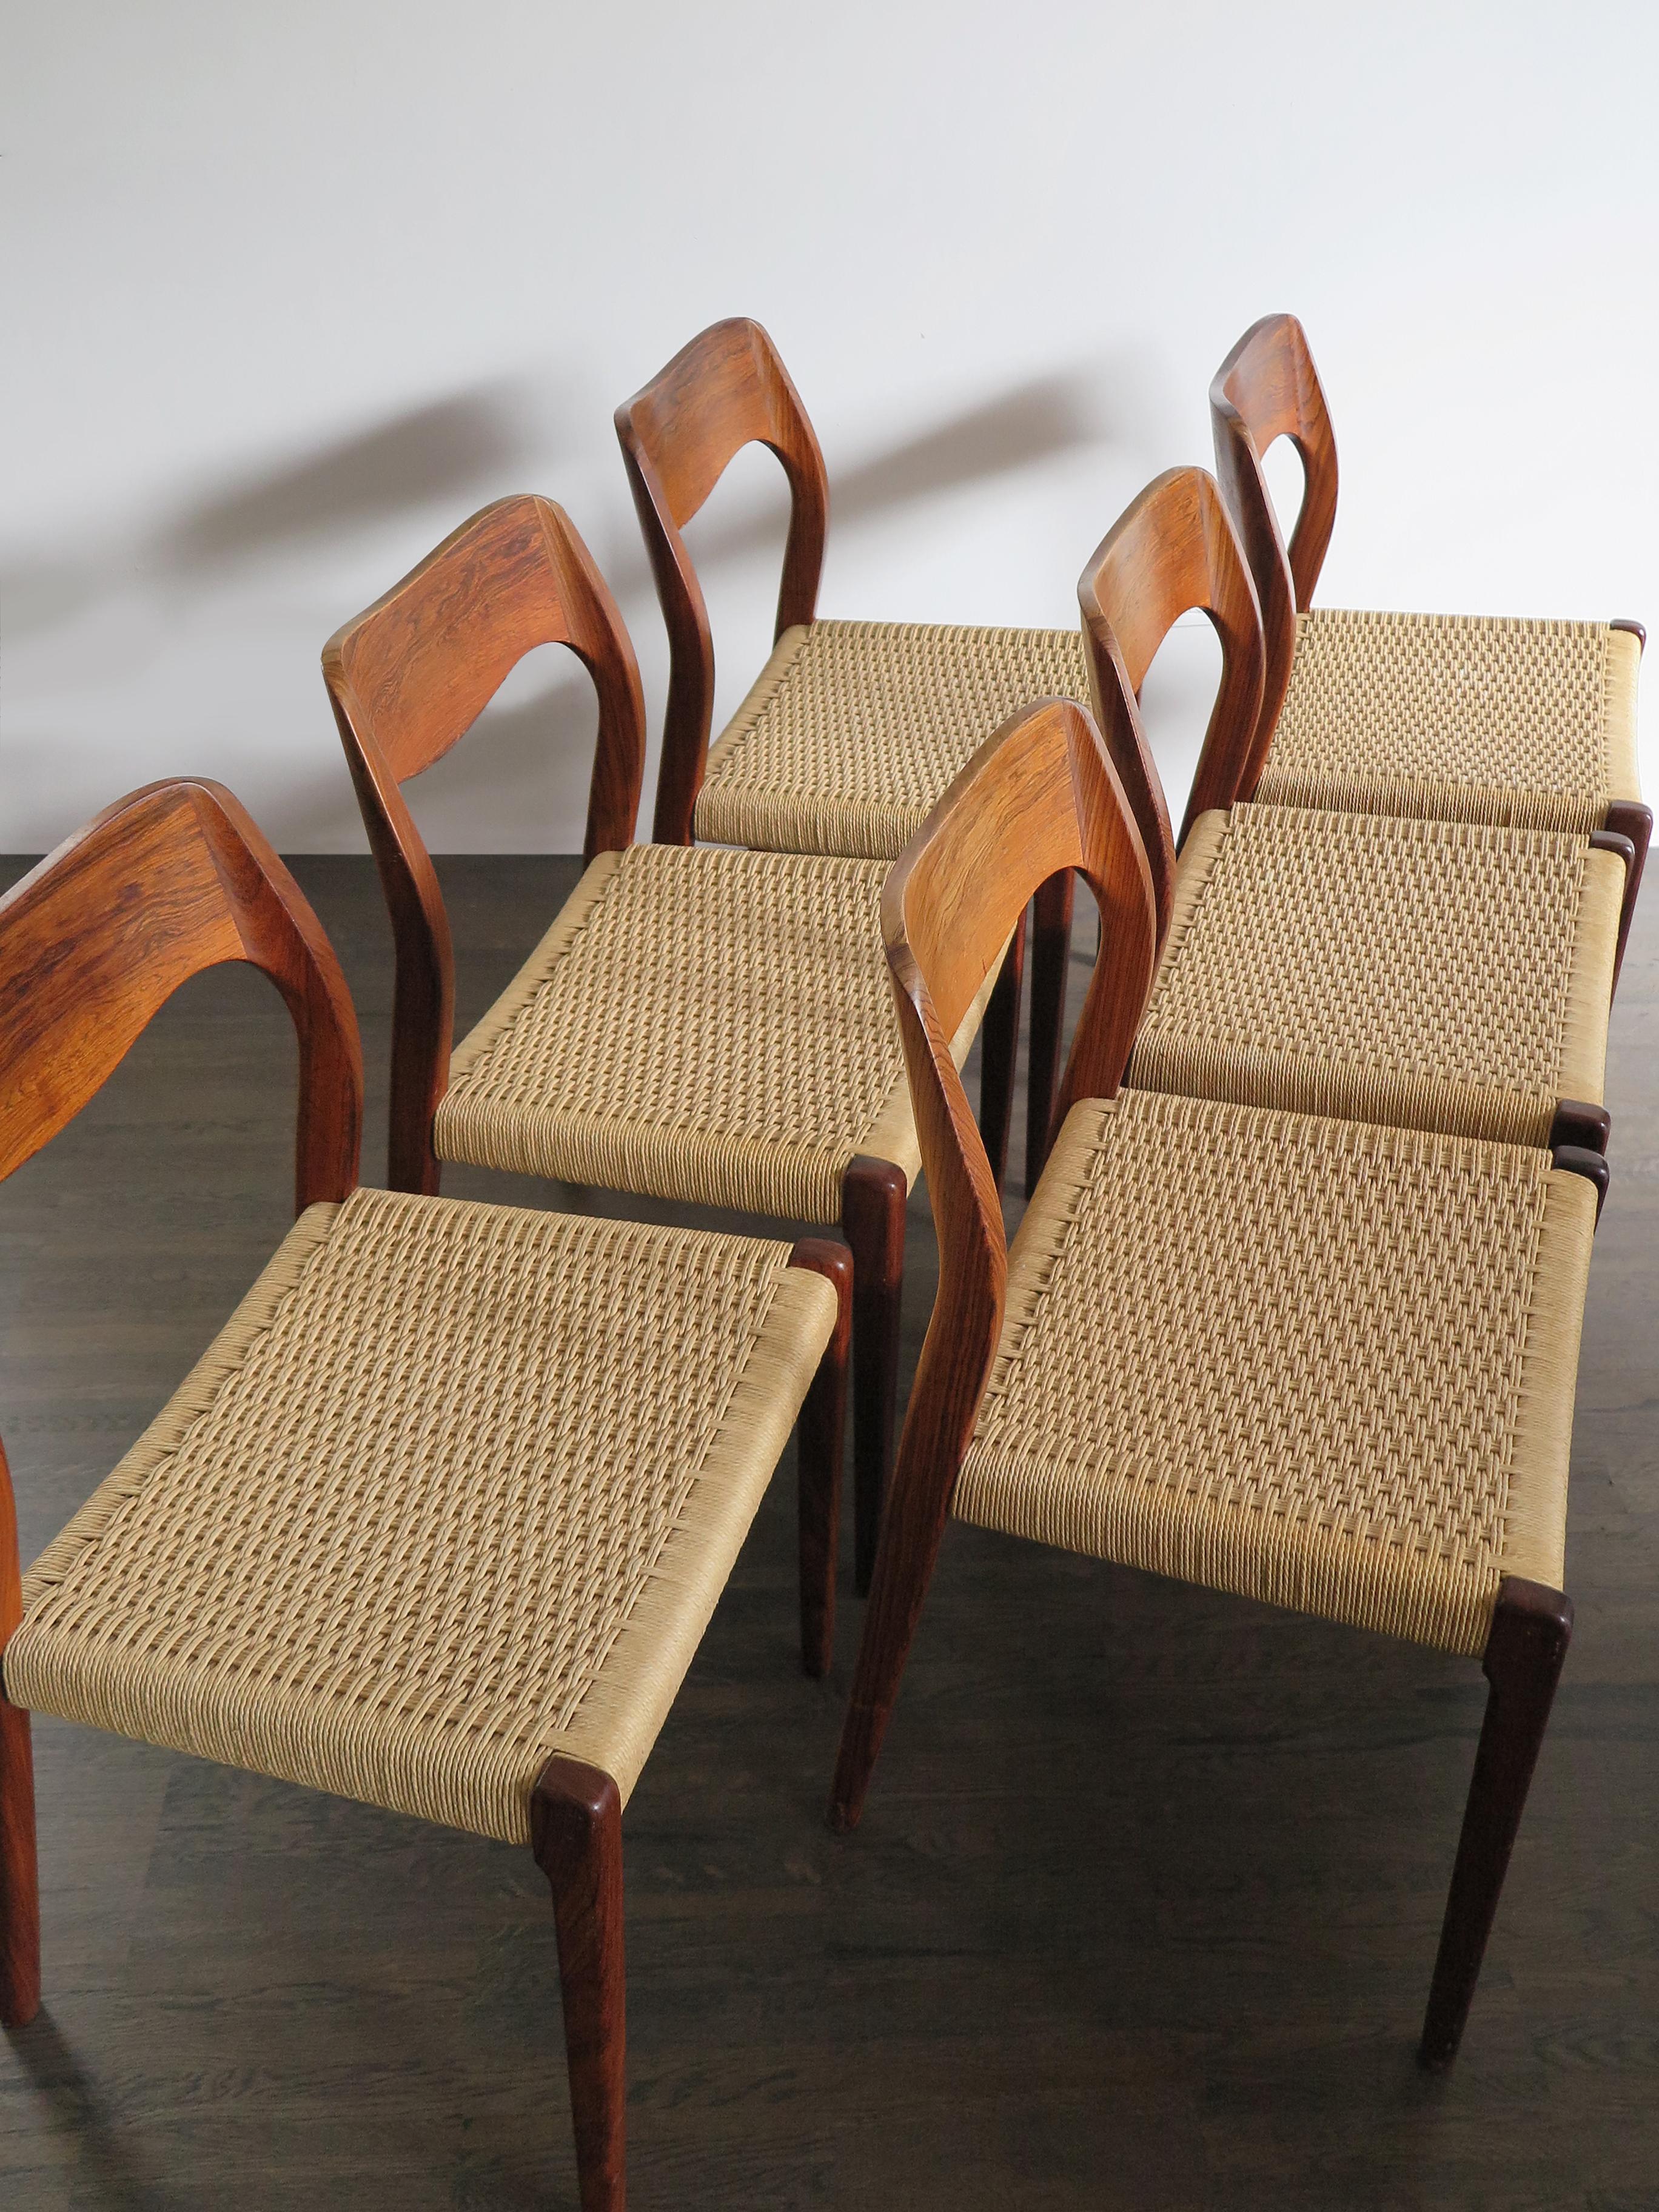 Scandinavian Modern Niels O. Møller Scandinavian Midcentury Dining Chairs 71 in Wood and Rope, 1960s